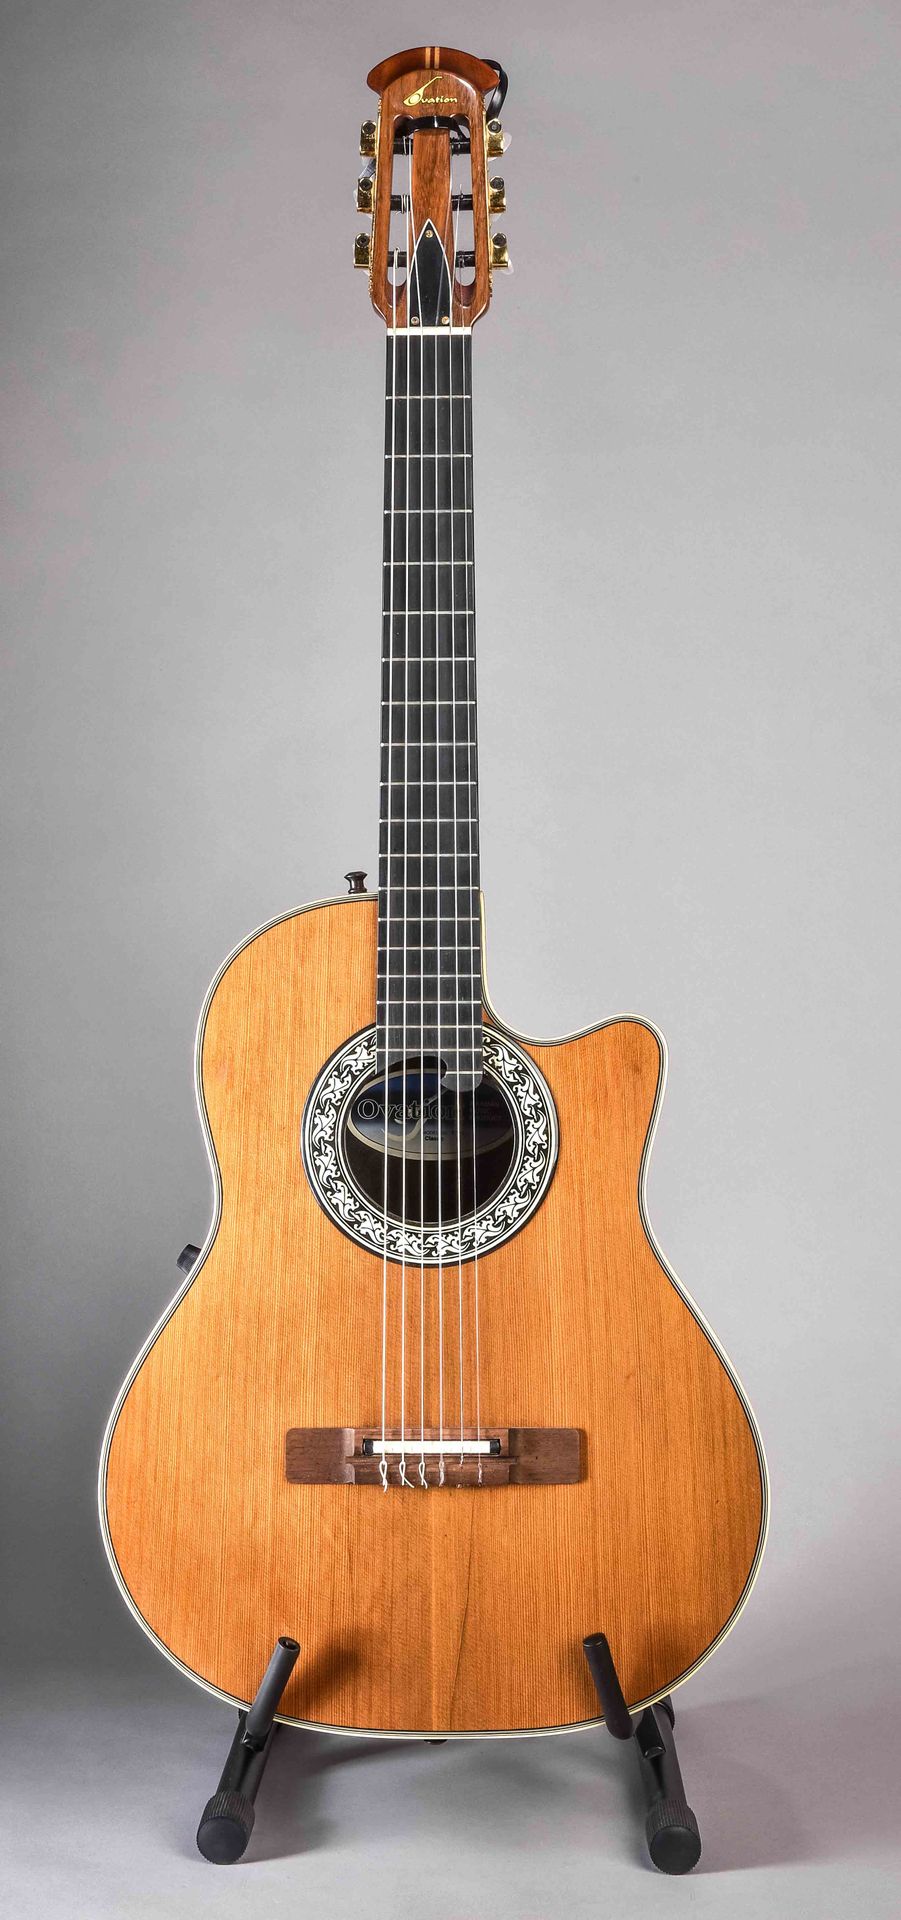 Null E - 吉他，"Ovation 1763"，塑料琴身，轻微损坏，有裂痕，长105厘米x40厘米，有包。